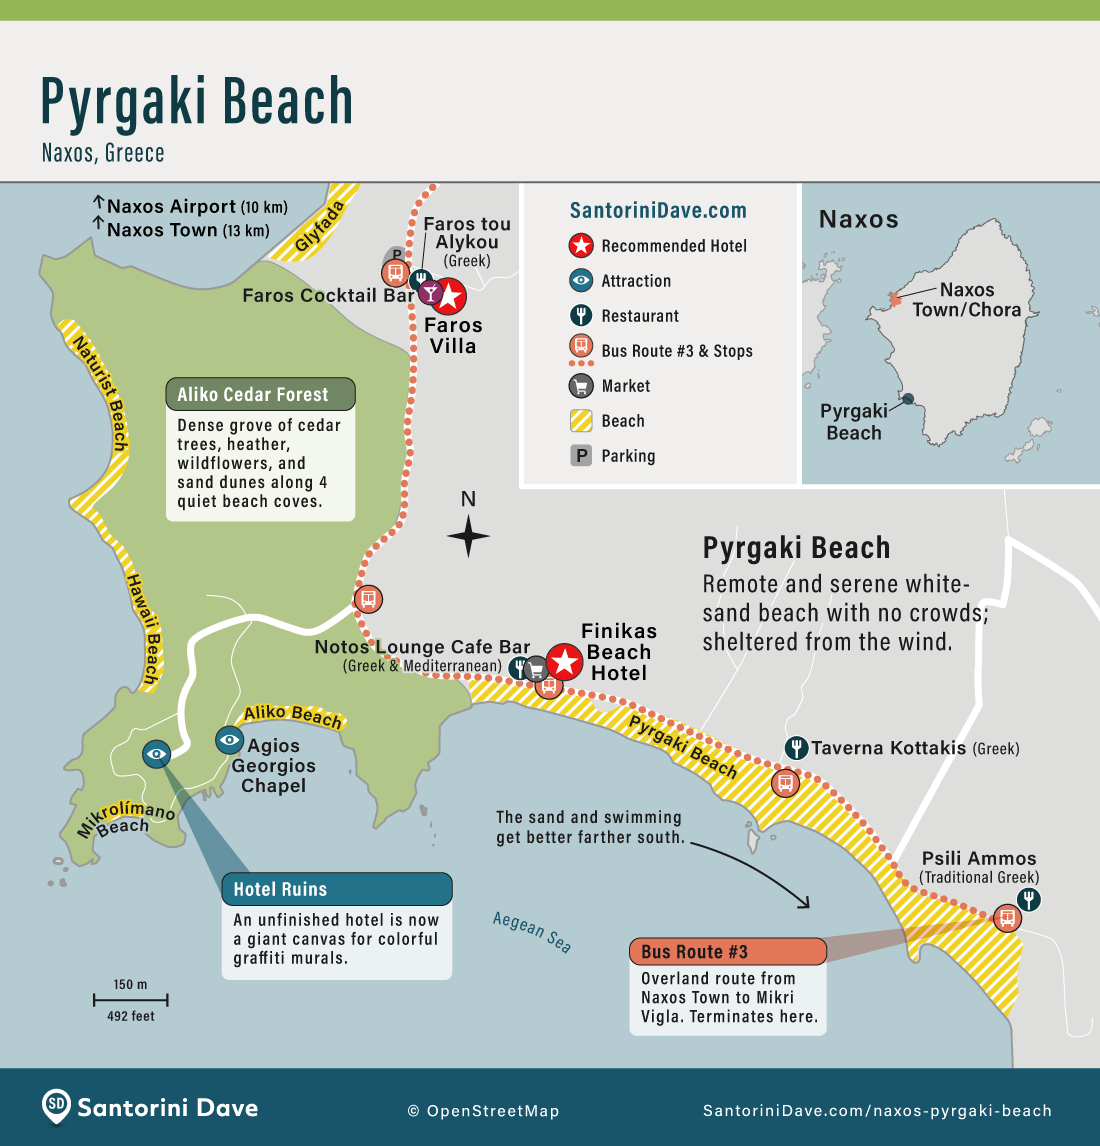 Map showing restaurants, hotels, and facilities at Pyrgaki Beach on Naxos